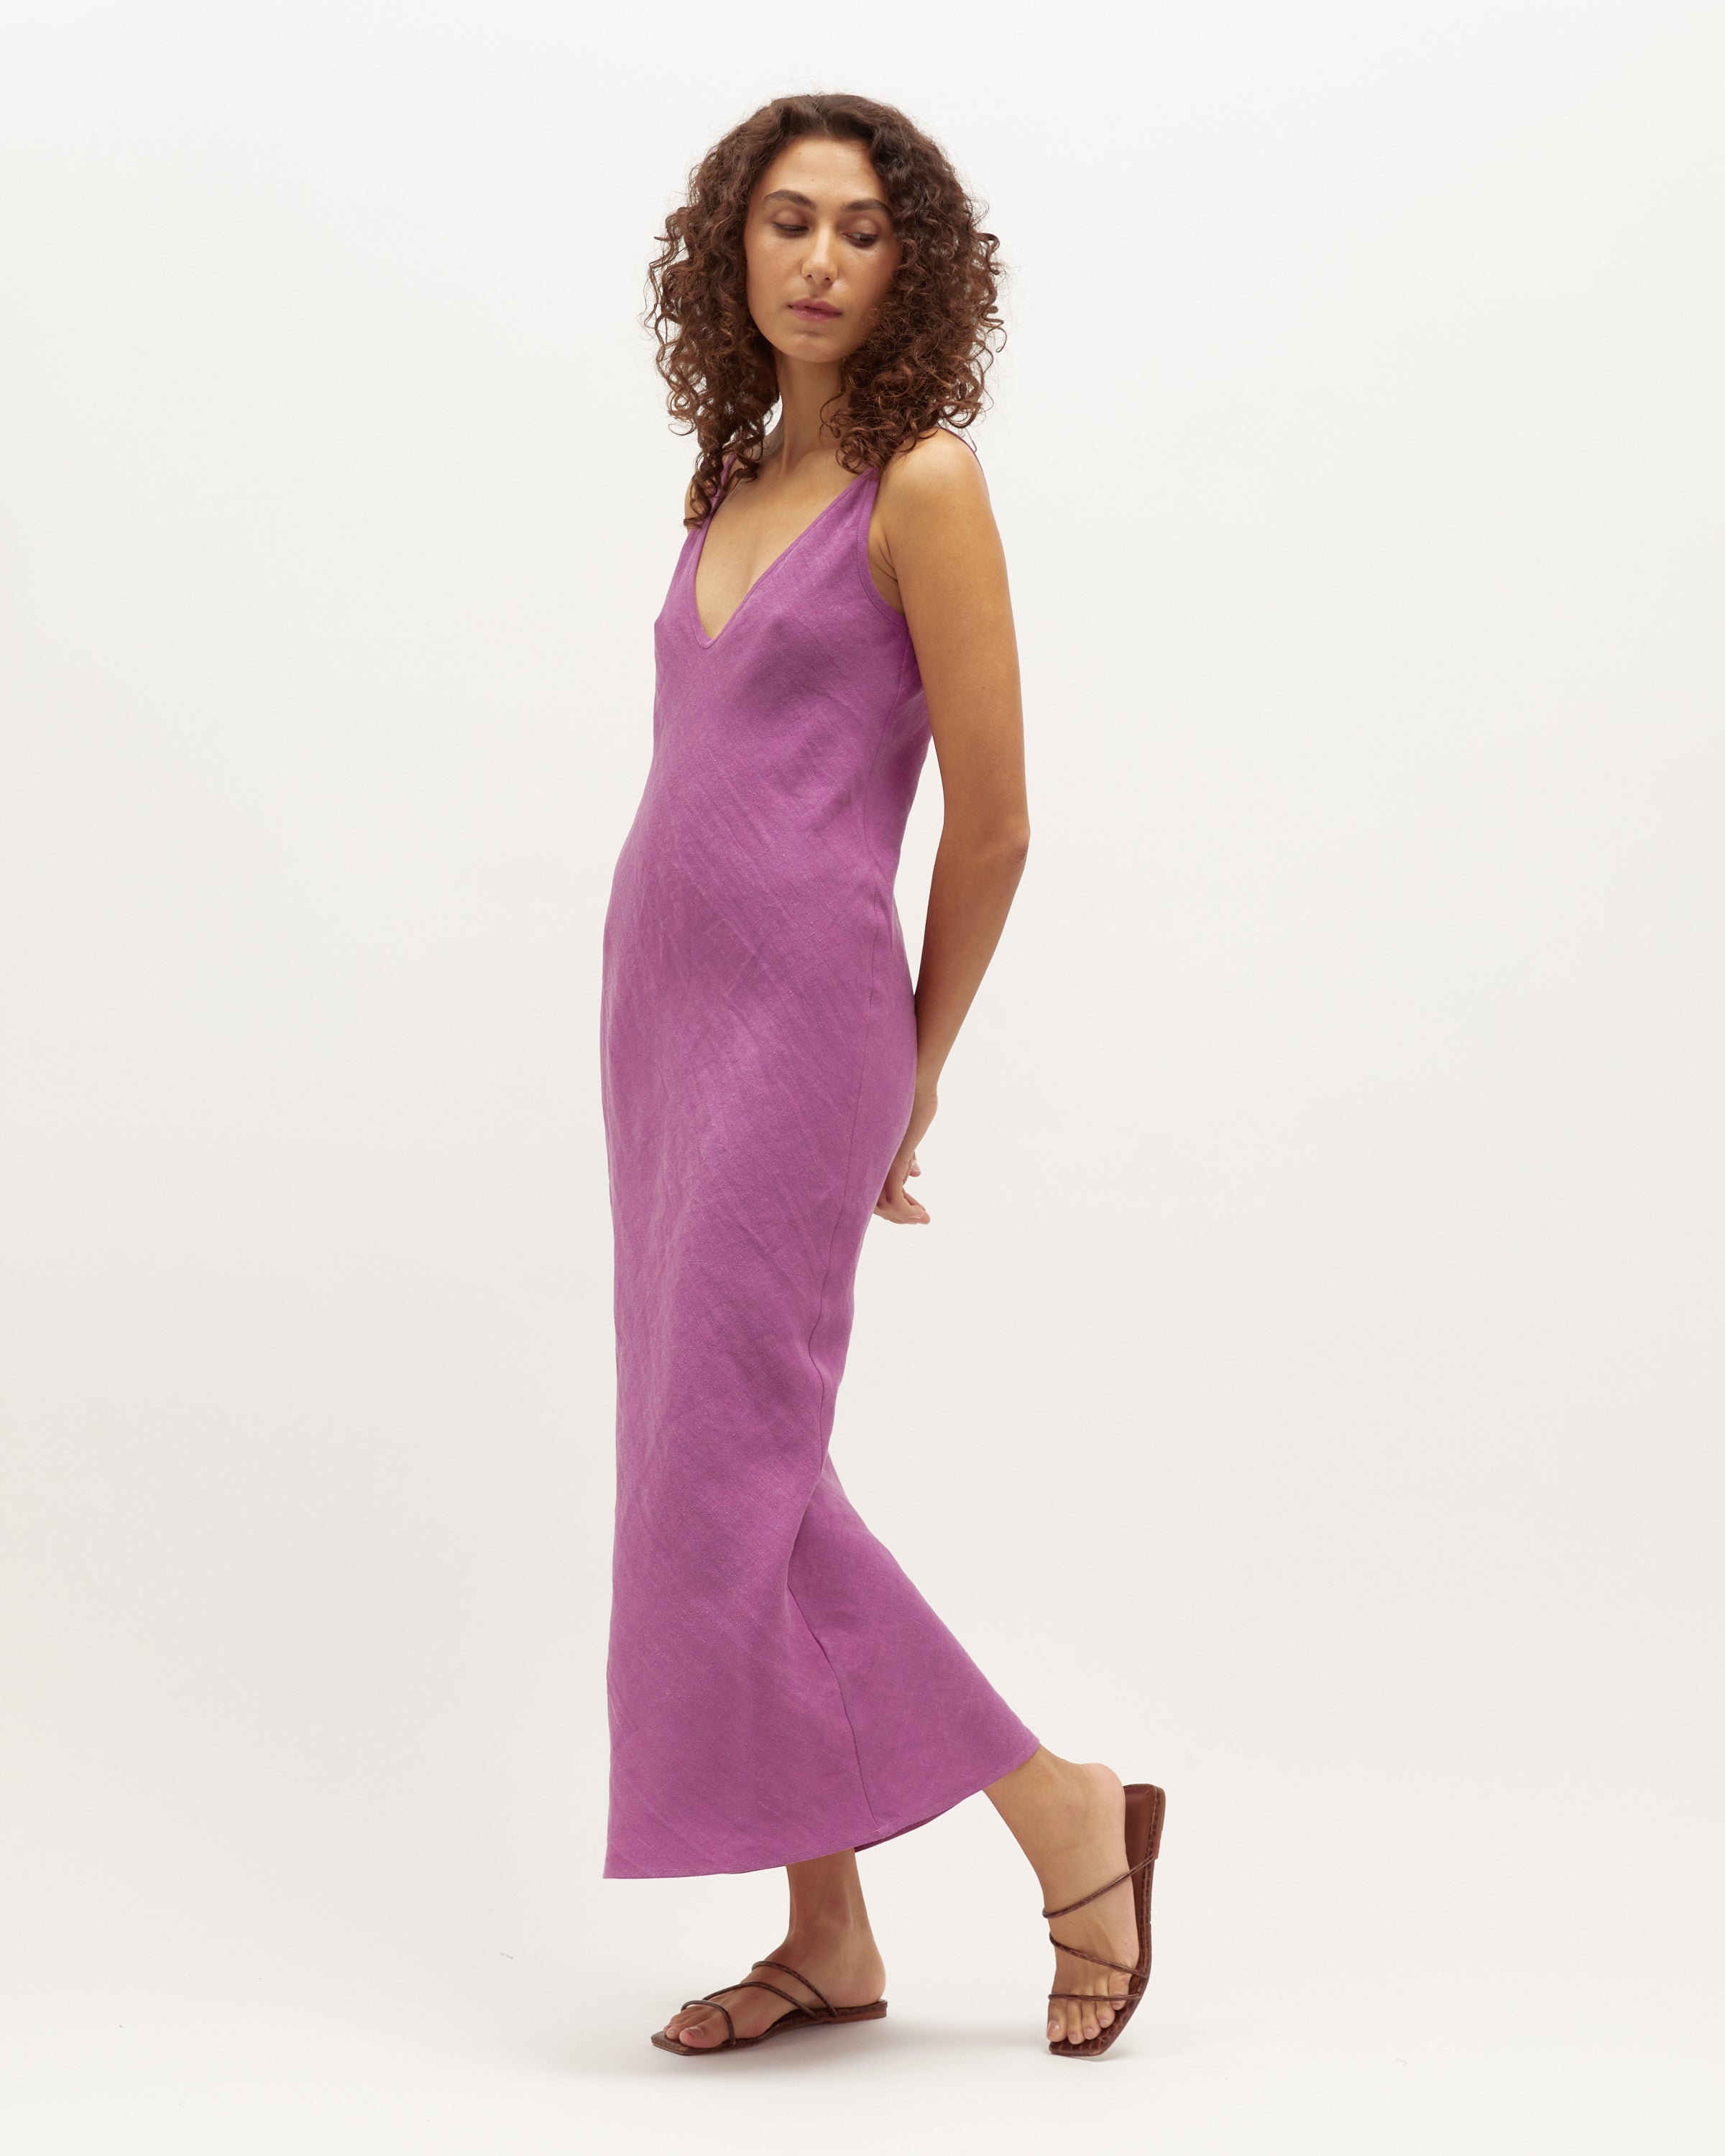 Midi Bias Dress | Berry Washed Linen $289